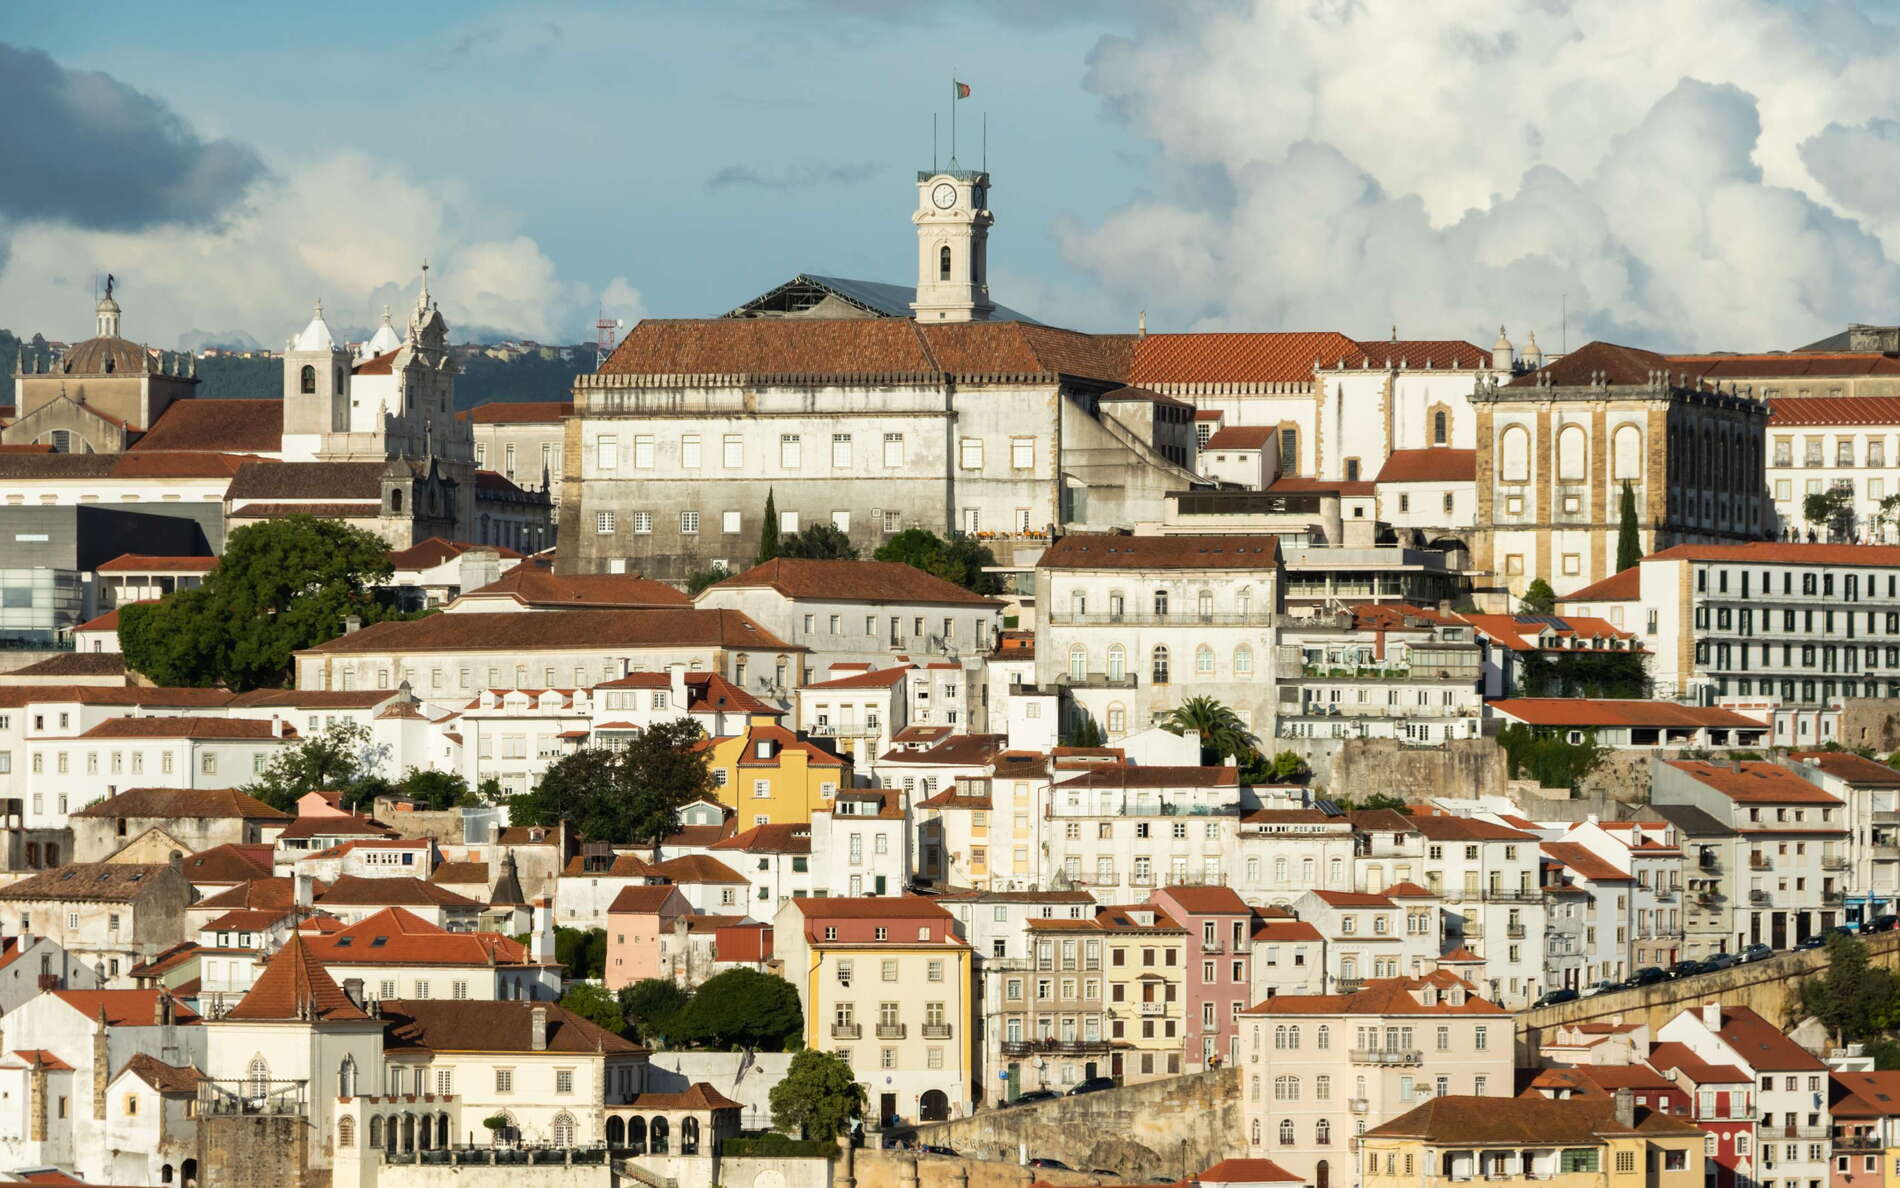 Coimbra | Historic centre with University of Coimbra